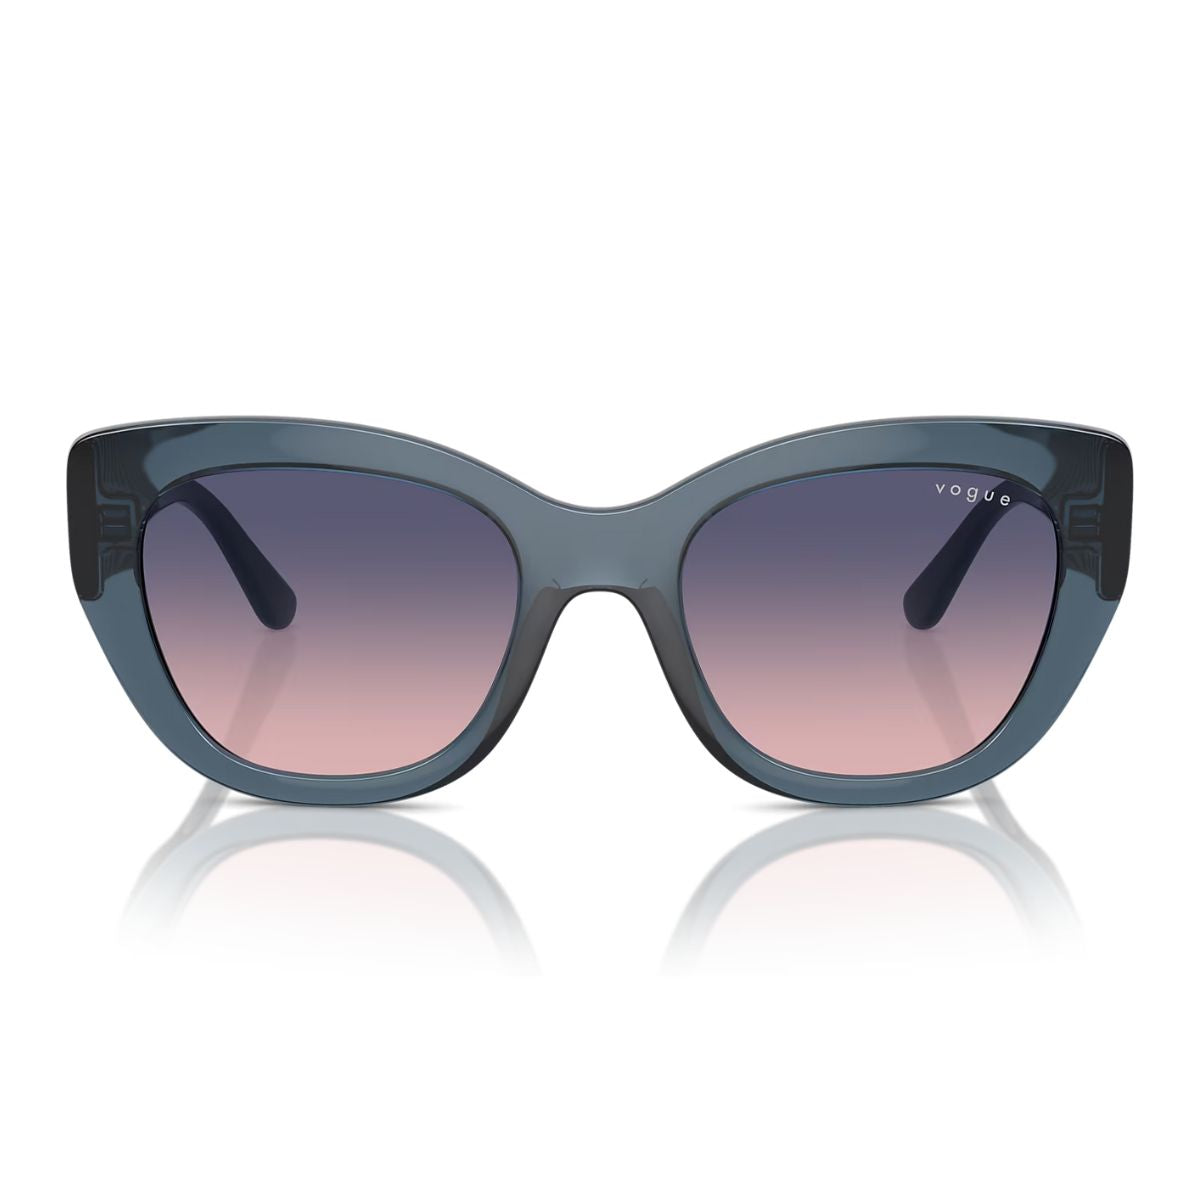 "Shop Latest Vogue Cat Eye Sunglasses for Women's at online | Optorium"